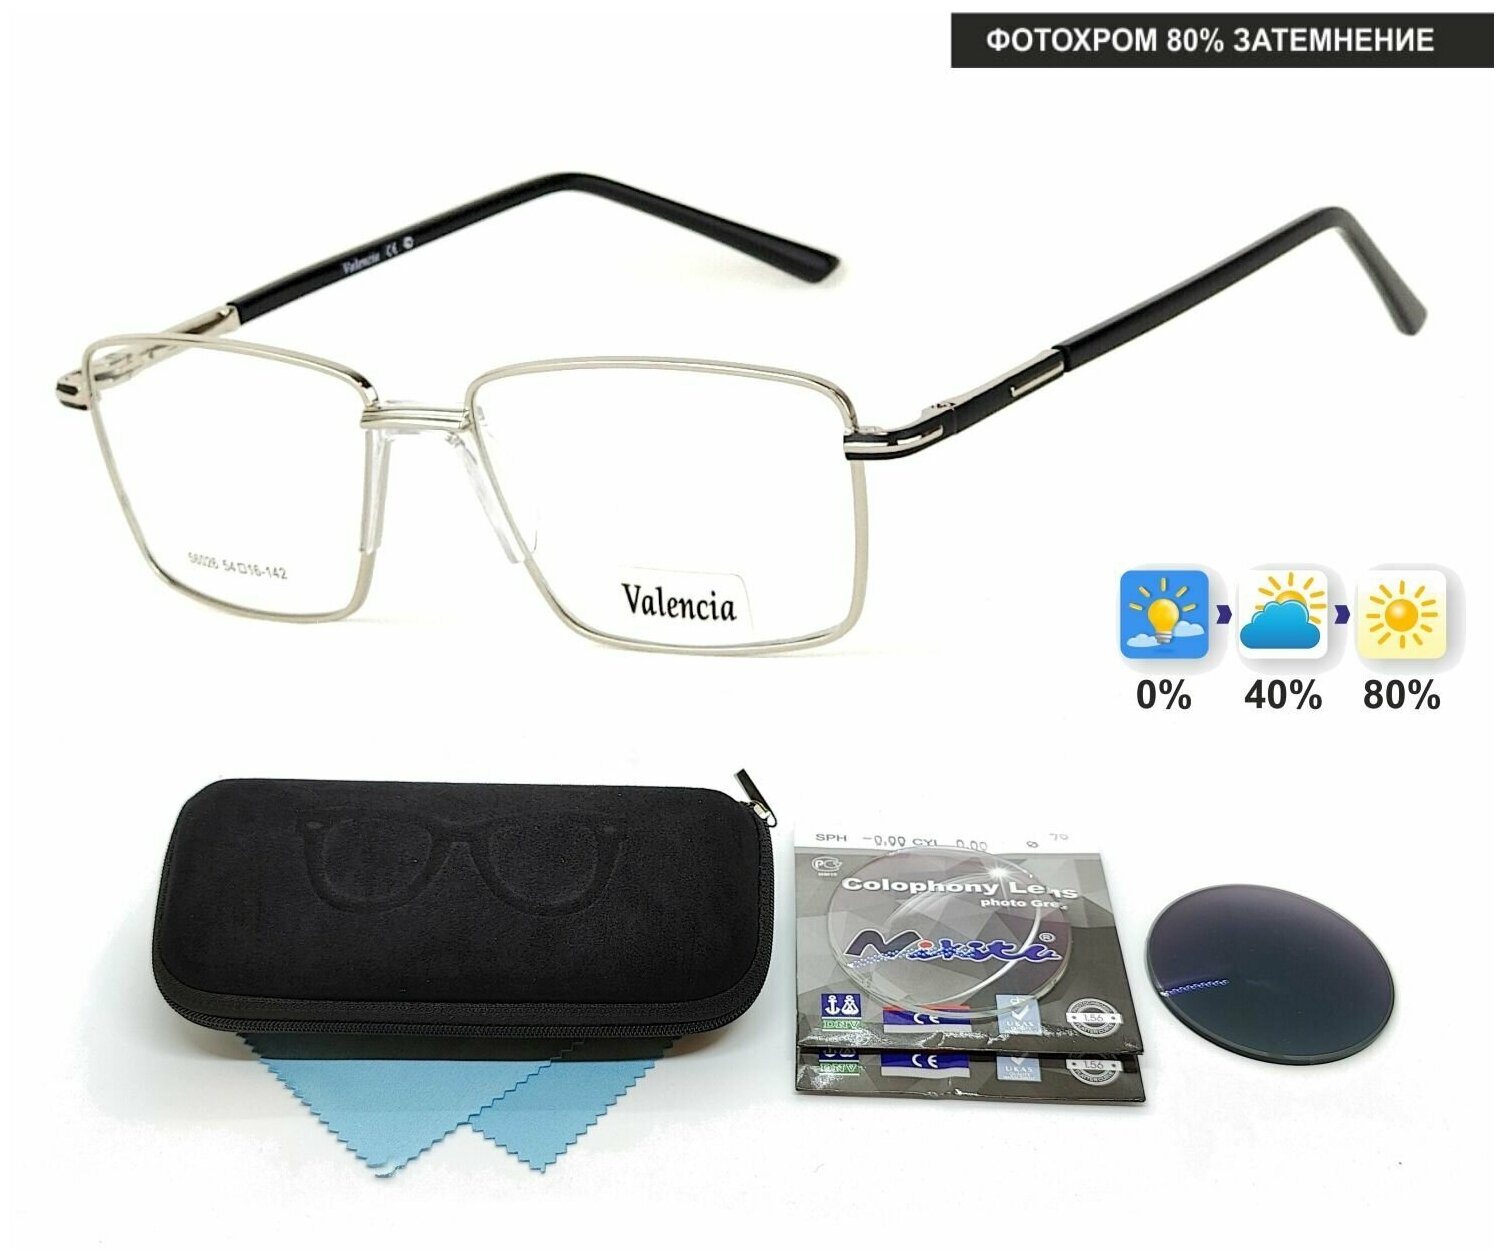 Фотохромные очки с футляром-змейка VALENCIA мод. 56026 Цвет 4 с линзами NIKITA 1.56 Colophony GRAY, HMC+ -4.00 РЦ 62-64